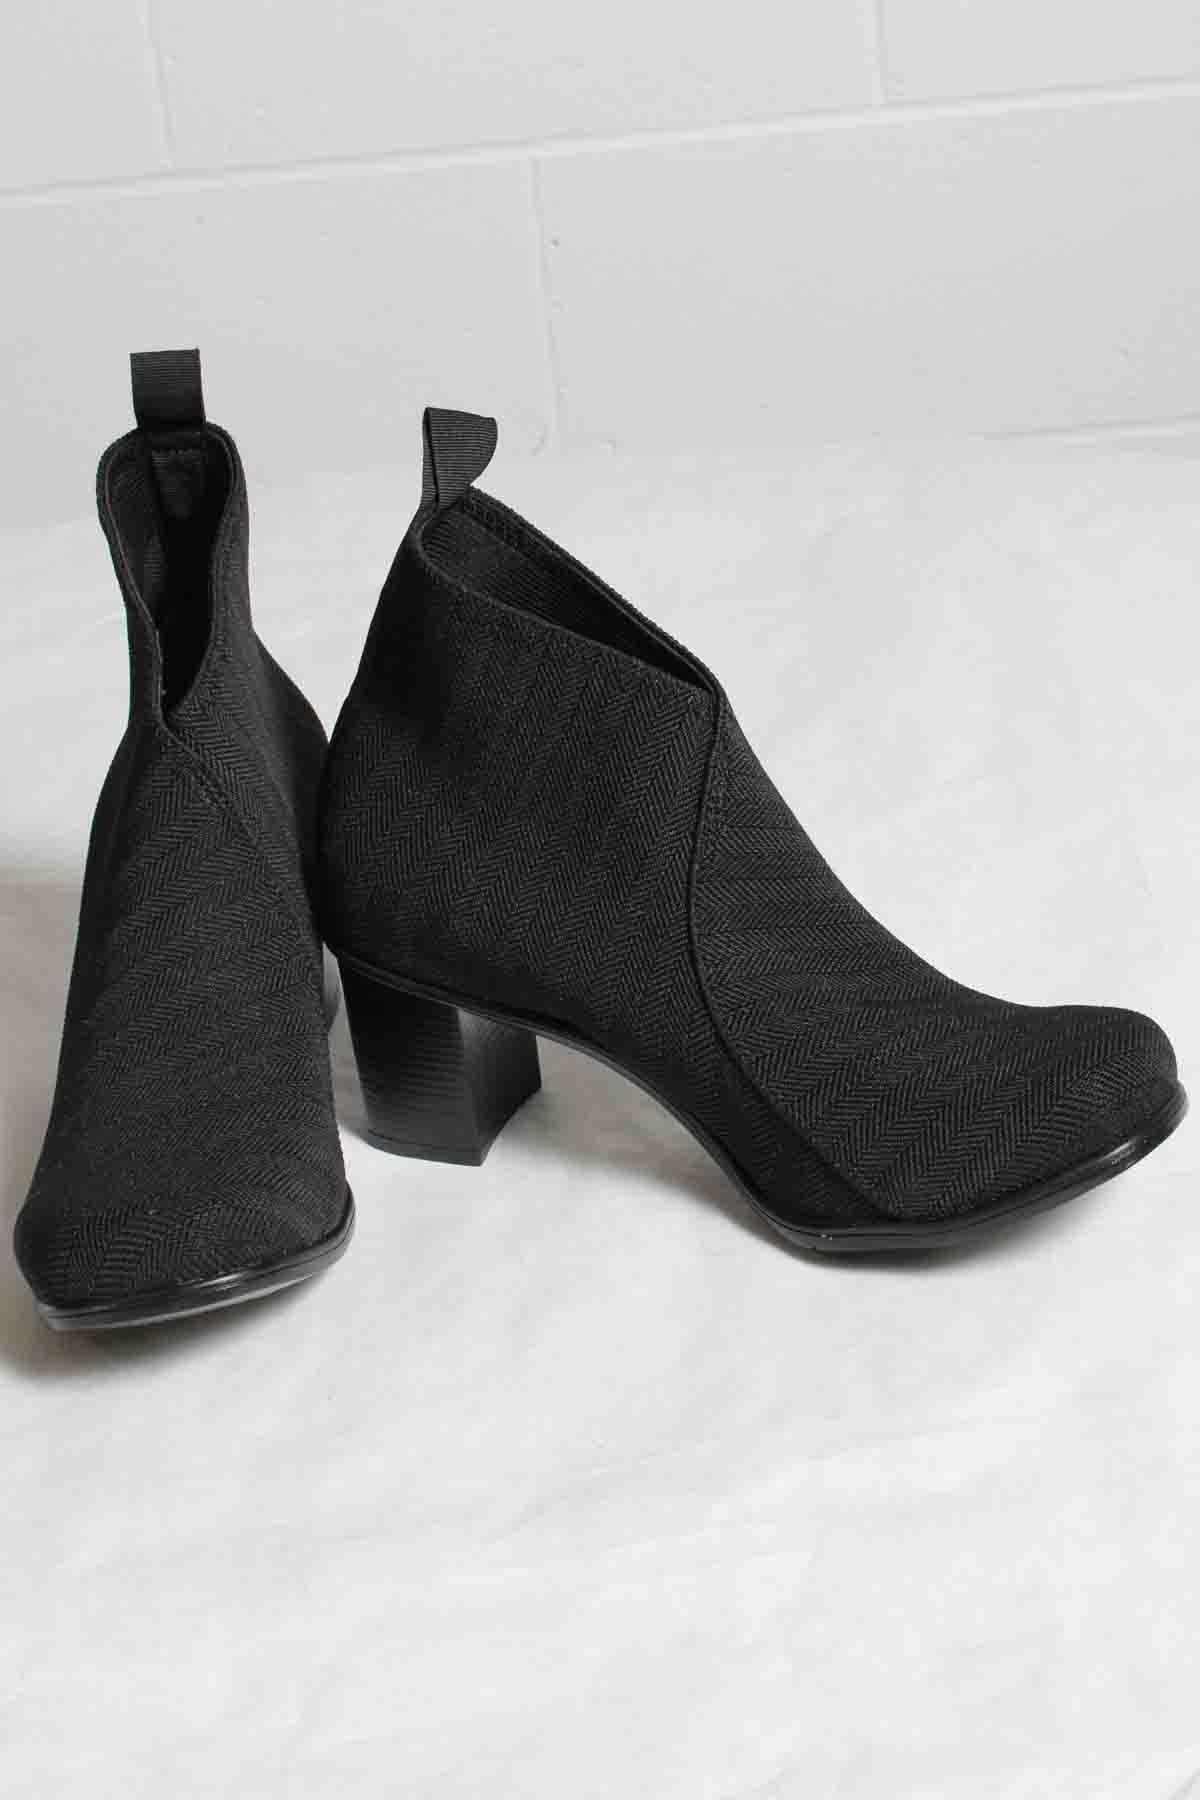 Telfair Boot-Charleston Shoe Company - Inspire Me